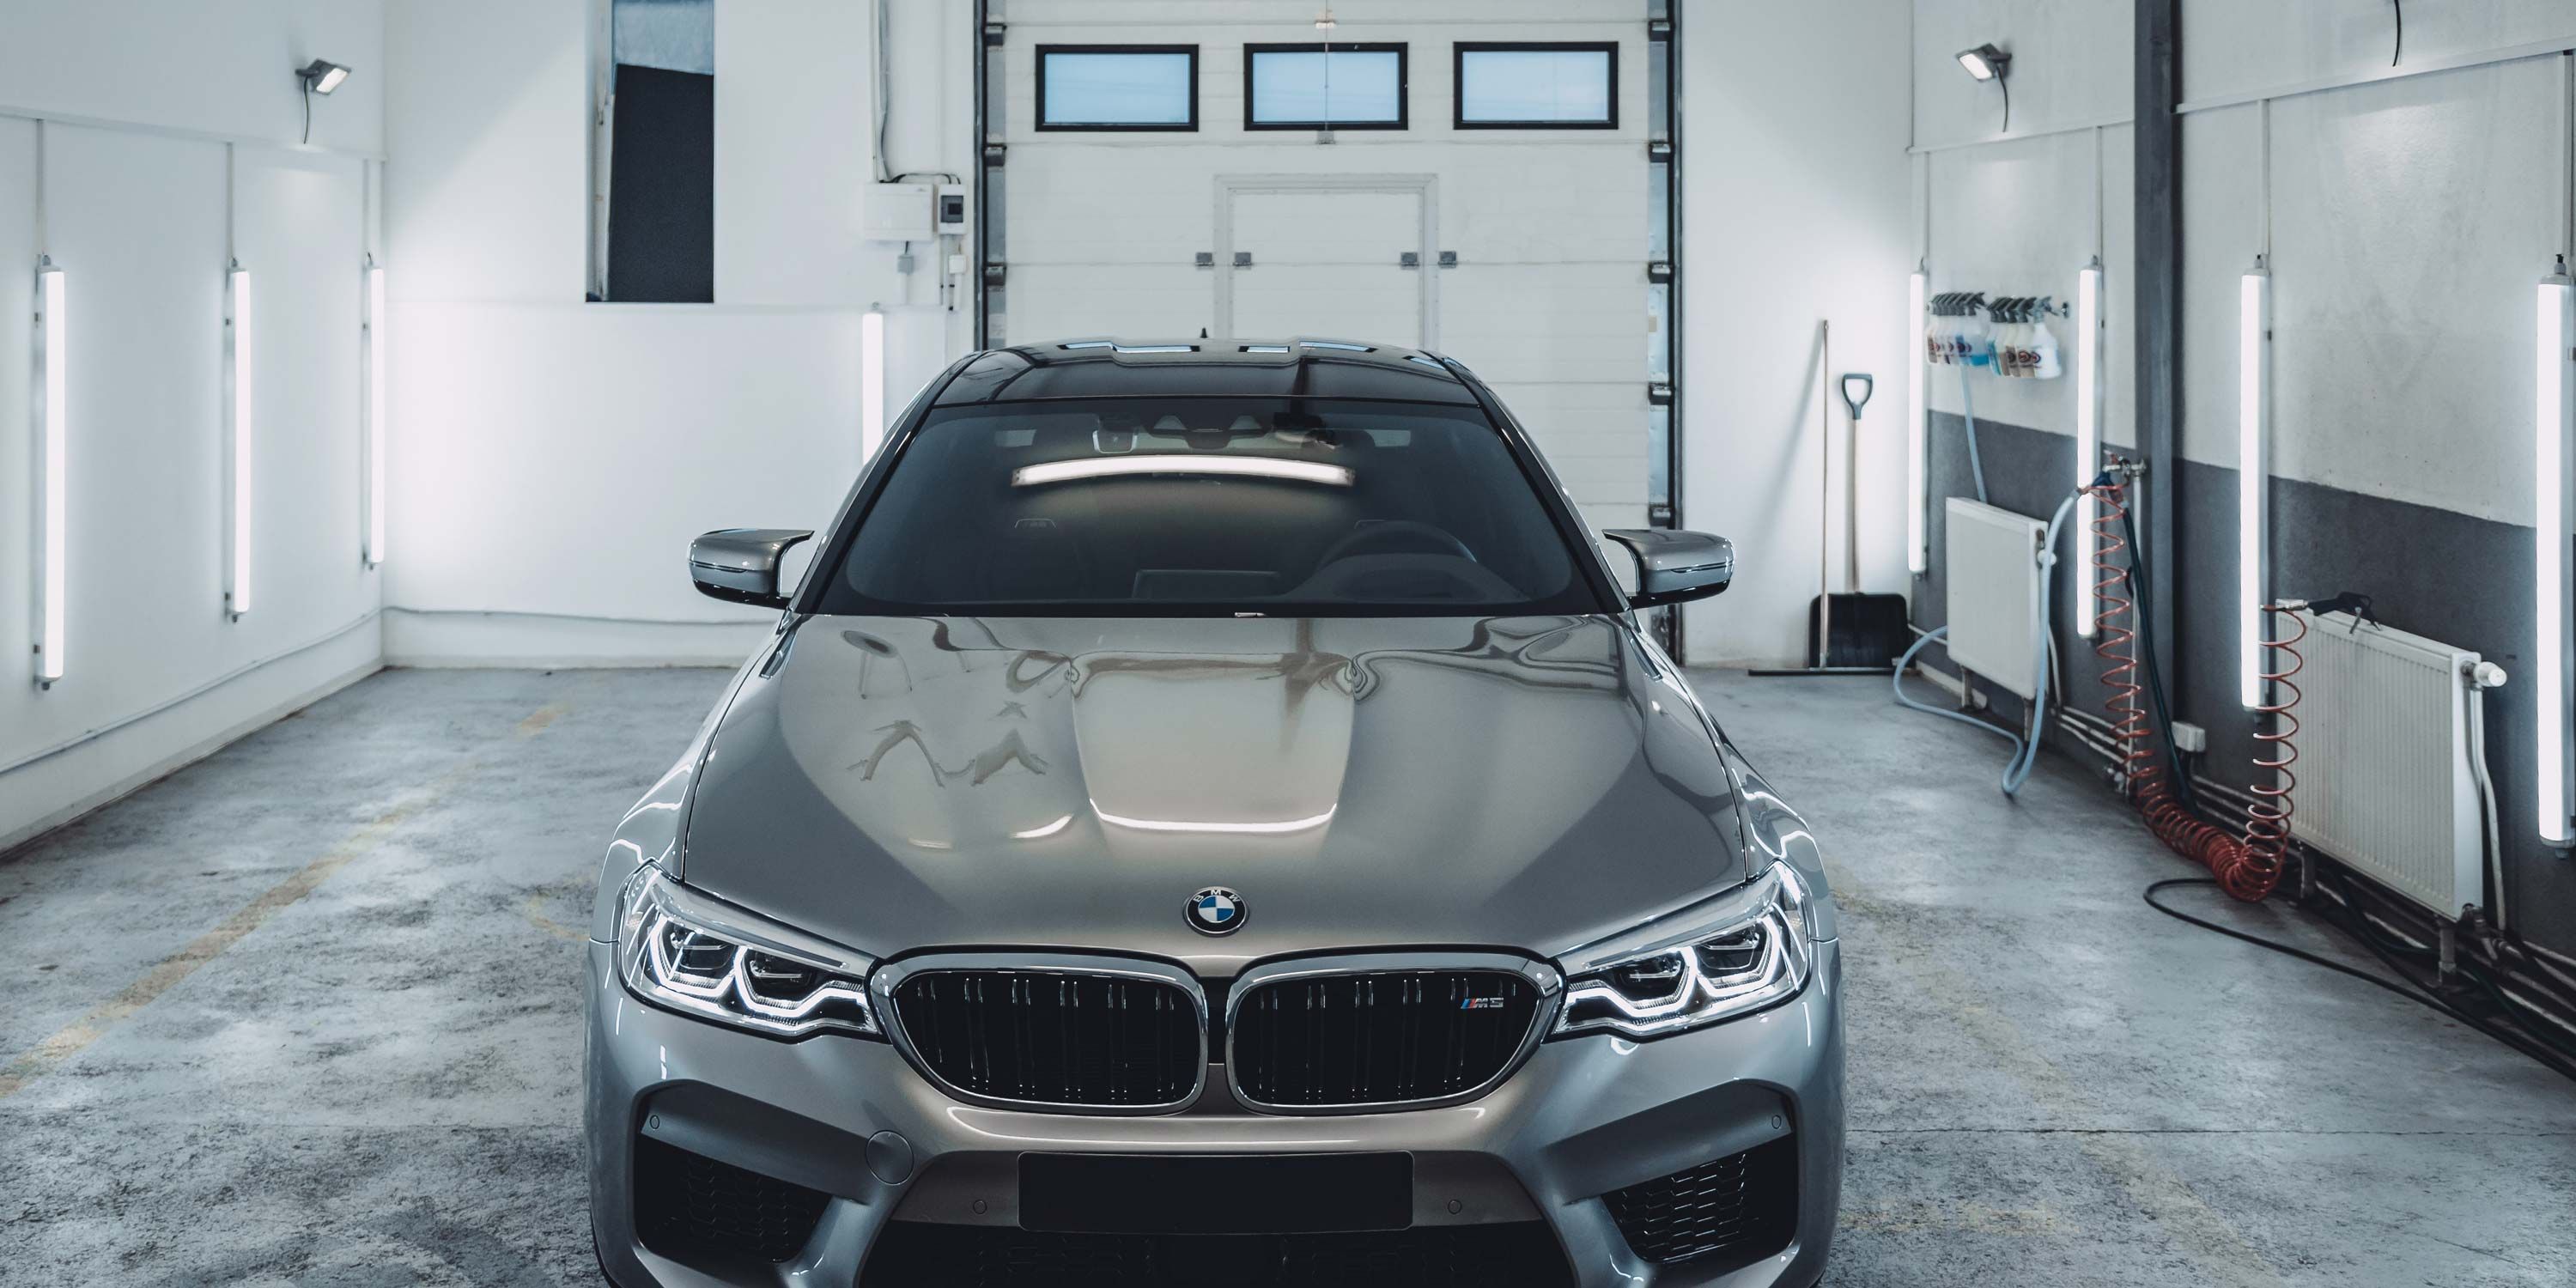 BMW in grey garage